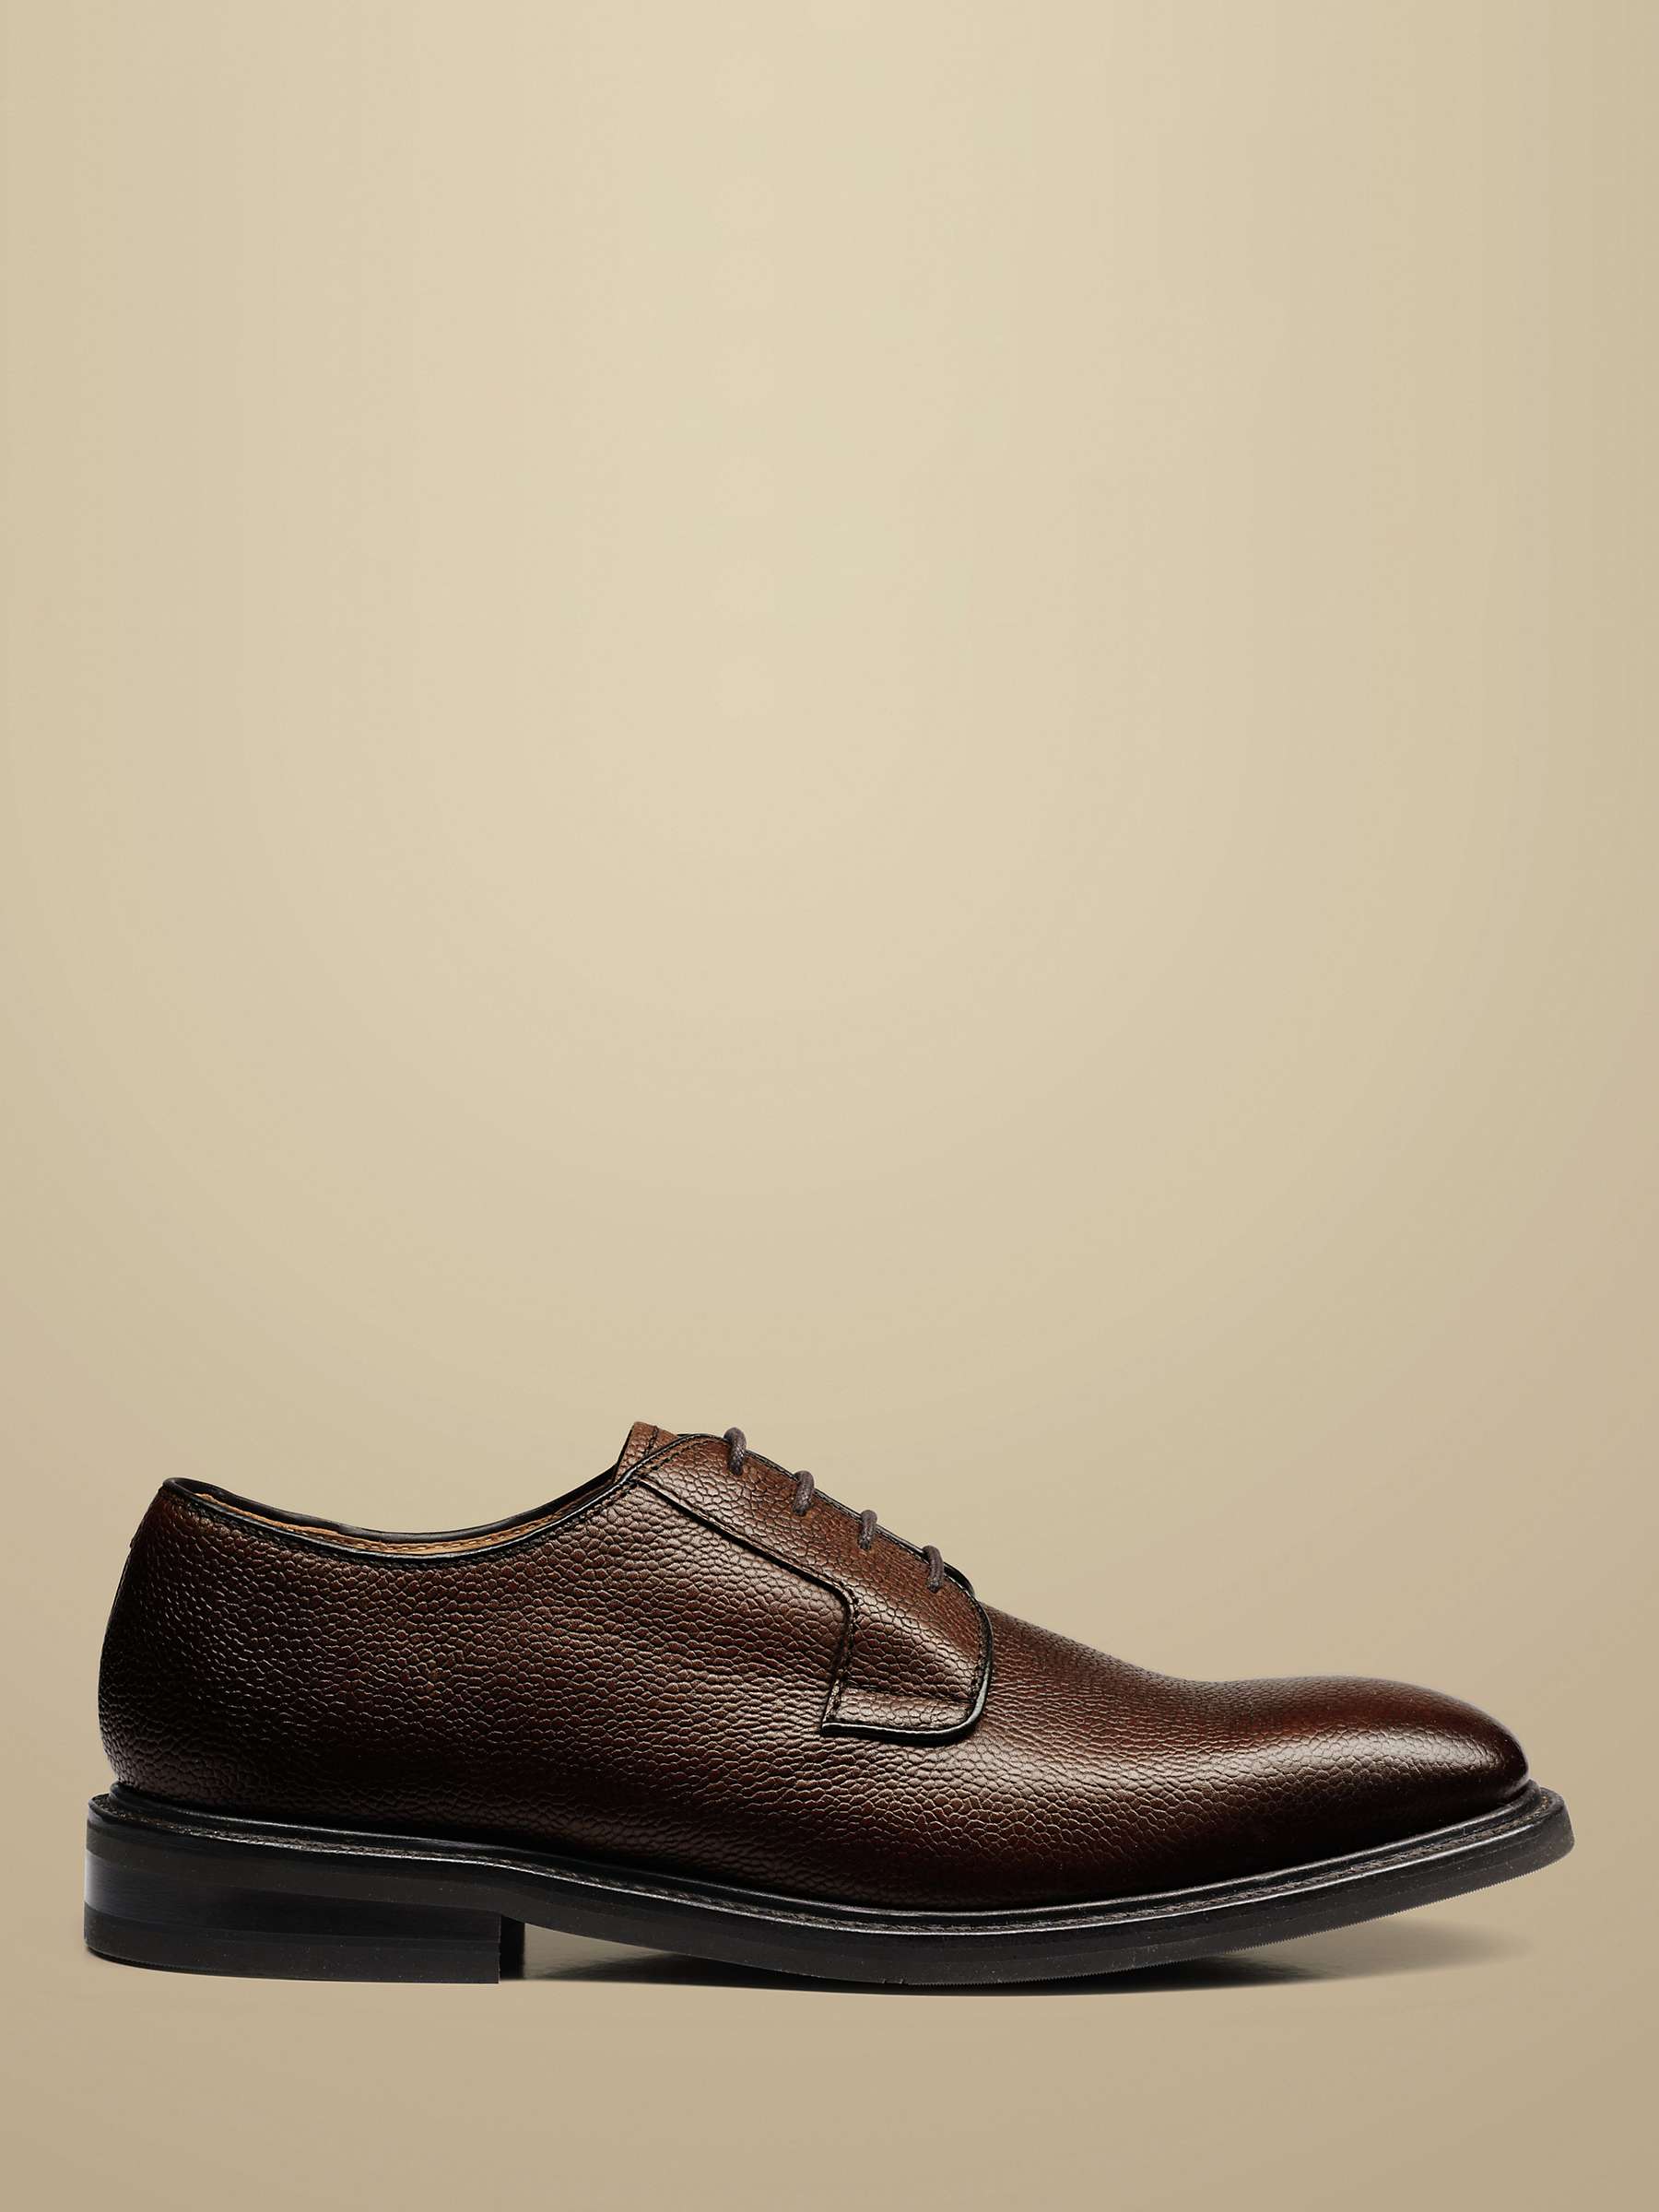 Buy Charles Tyrwhitt Grain Leather Derby Shoes, Chestnut Brown Online at johnlewis.com